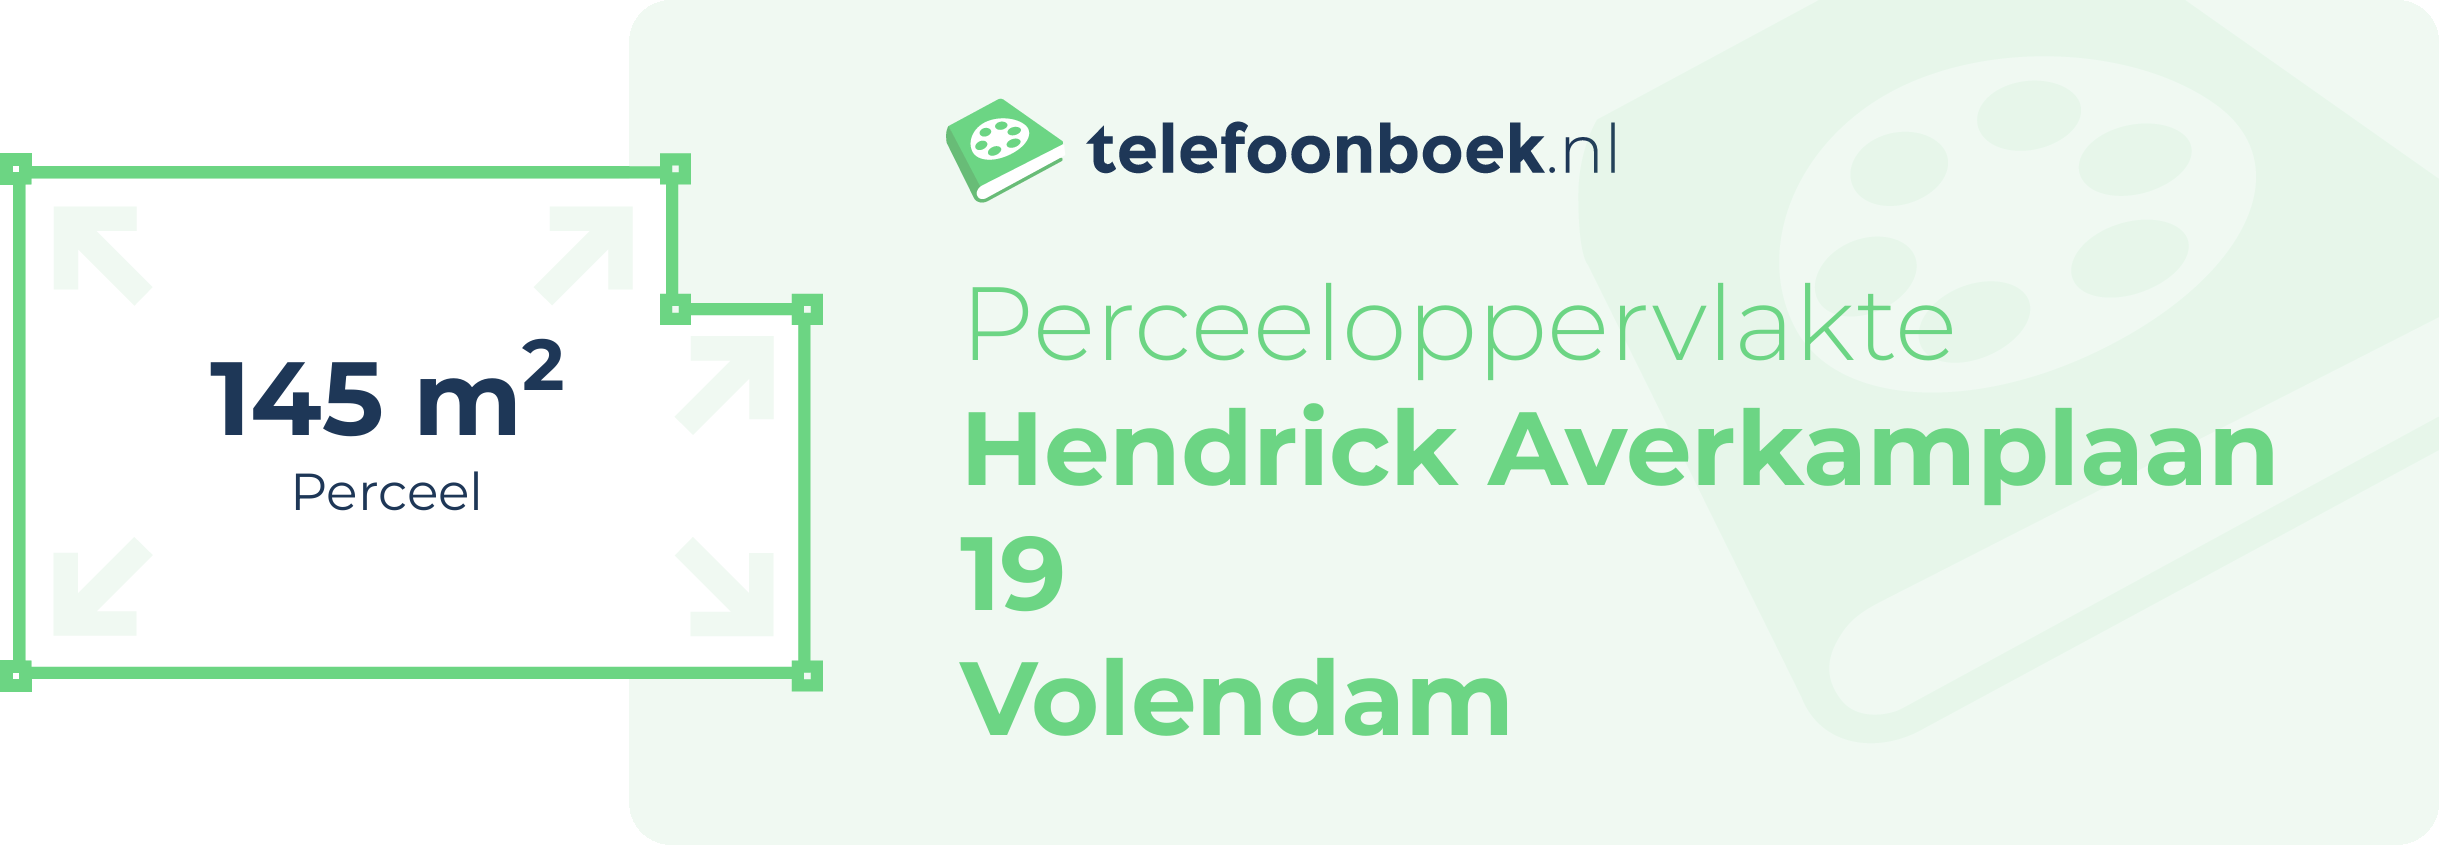 Perceeloppervlakte Hendrick Averkamplaan 19 Volendam